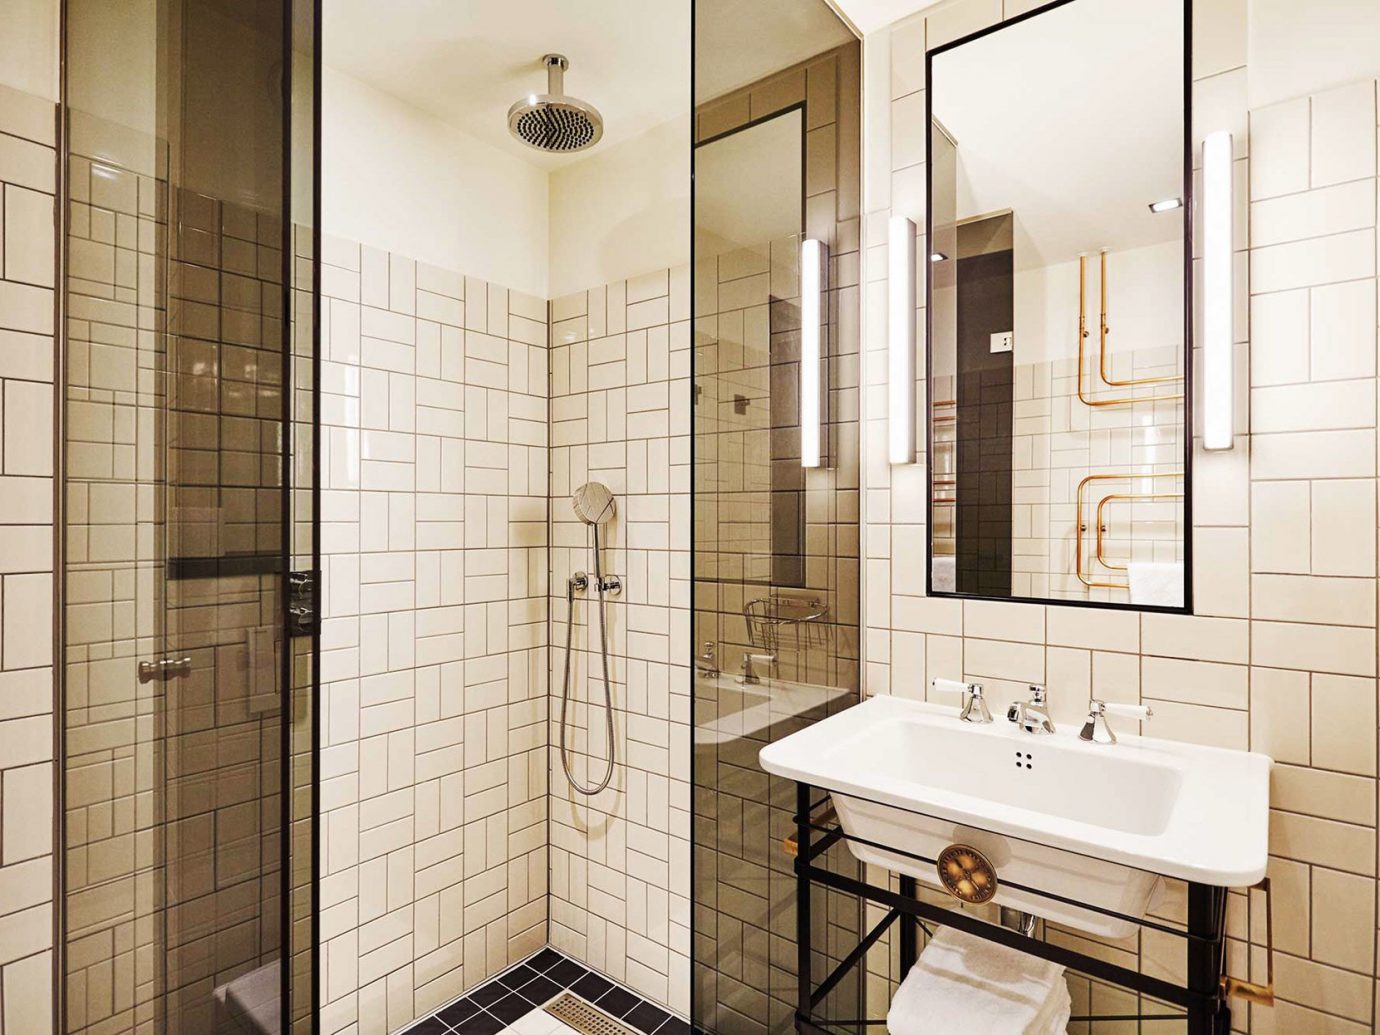 Amsterdam Boutique Hotels Hotels The Netherlands bathroom indoor wall room property sink floor plumbing fixture interior design flooring tile estate apartment tiled tan